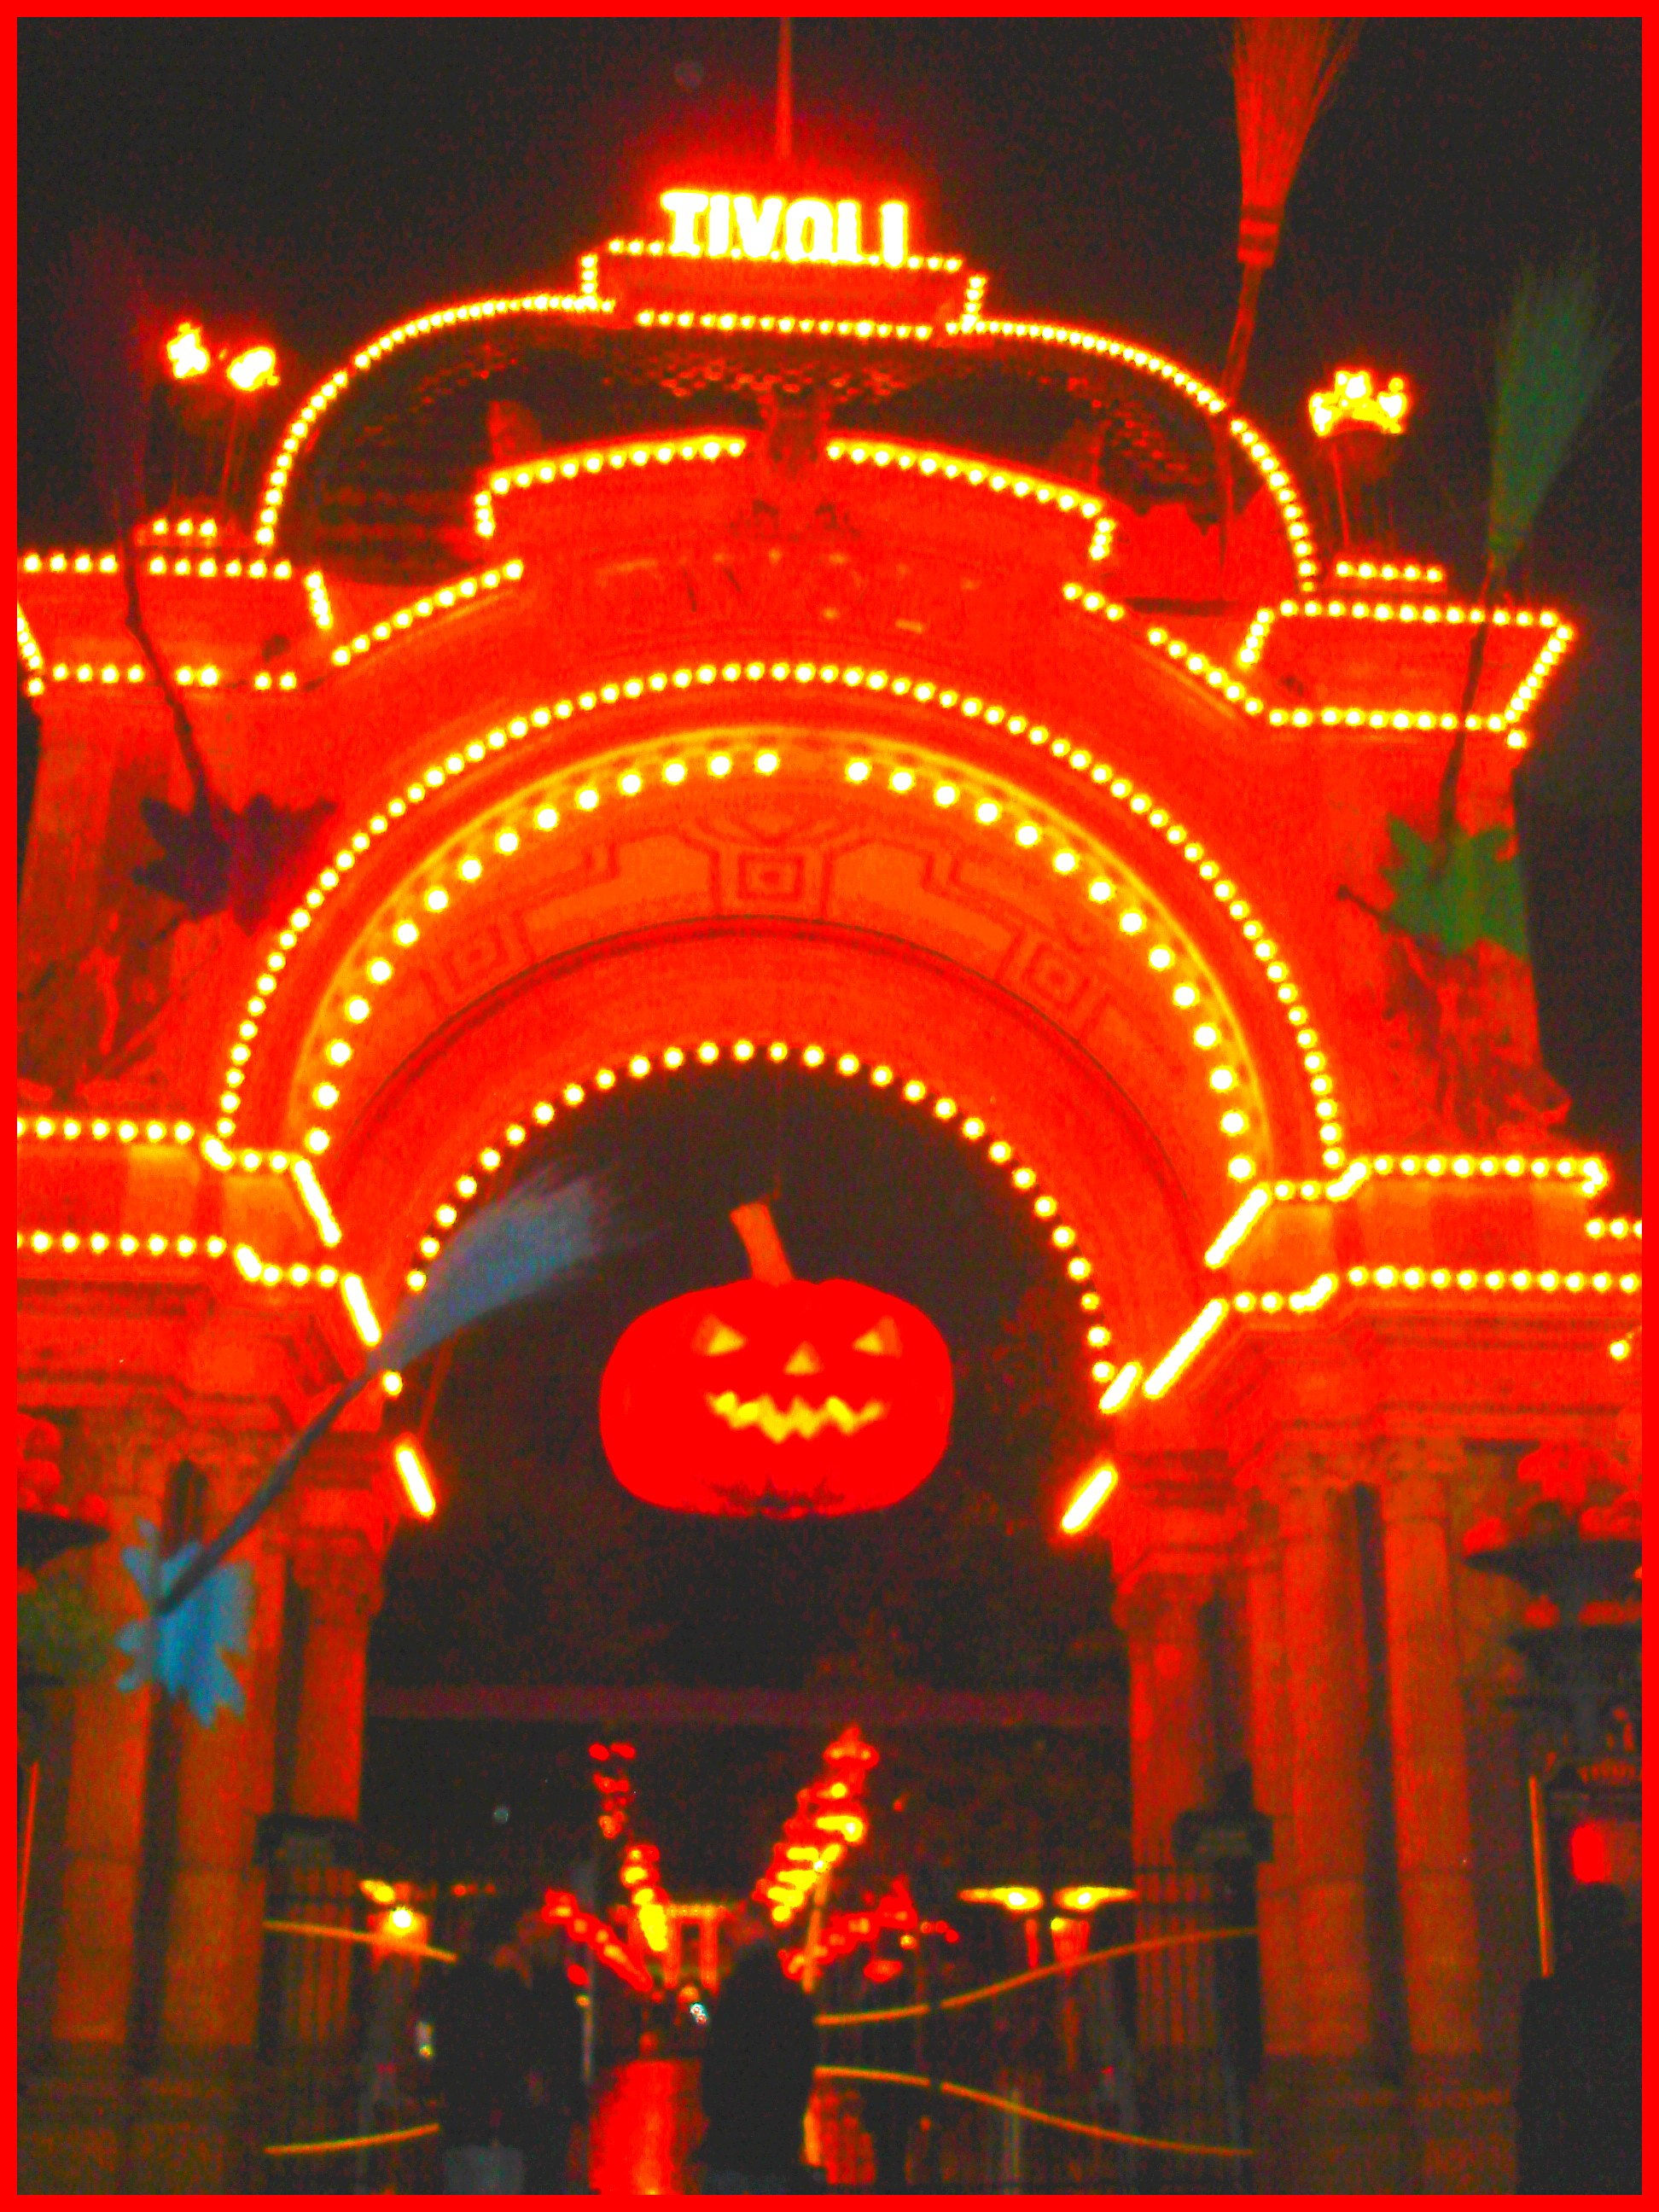 La citrouille d'Halloween Tivoli / Tivoli park pumpkin.  Copenhague.  19 octobre 2008.